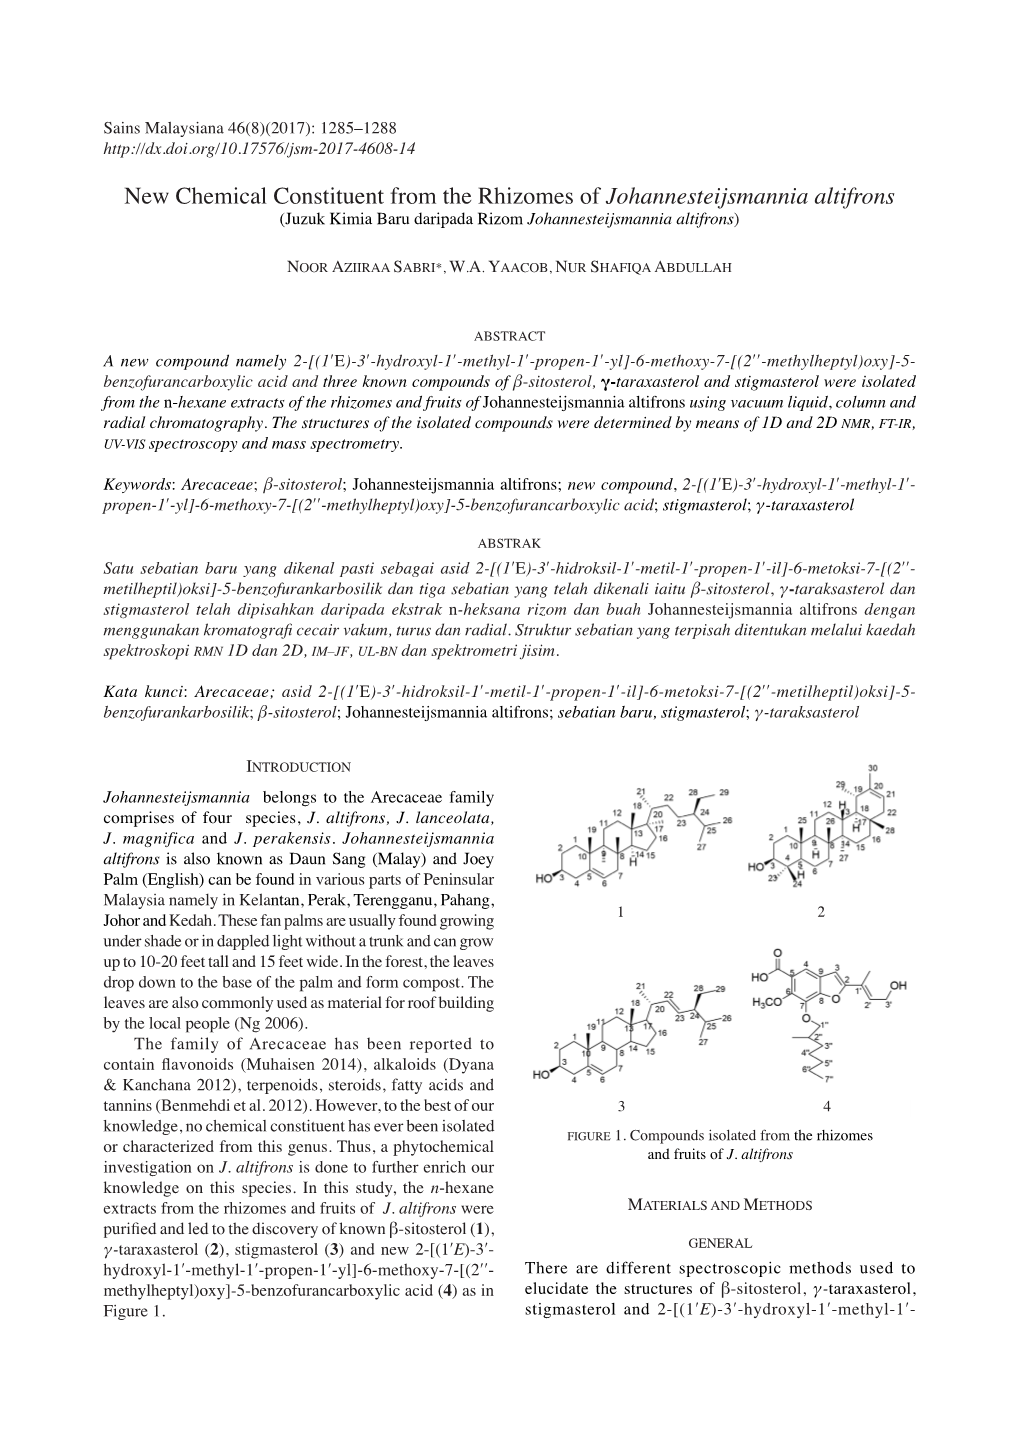 New Chemical Constituent from the Rhizomes of Johannesteijsmannia Altifrons (Juzuk Kimia Baru Daripada Rizom Johannesteijsmannia Altifrons)